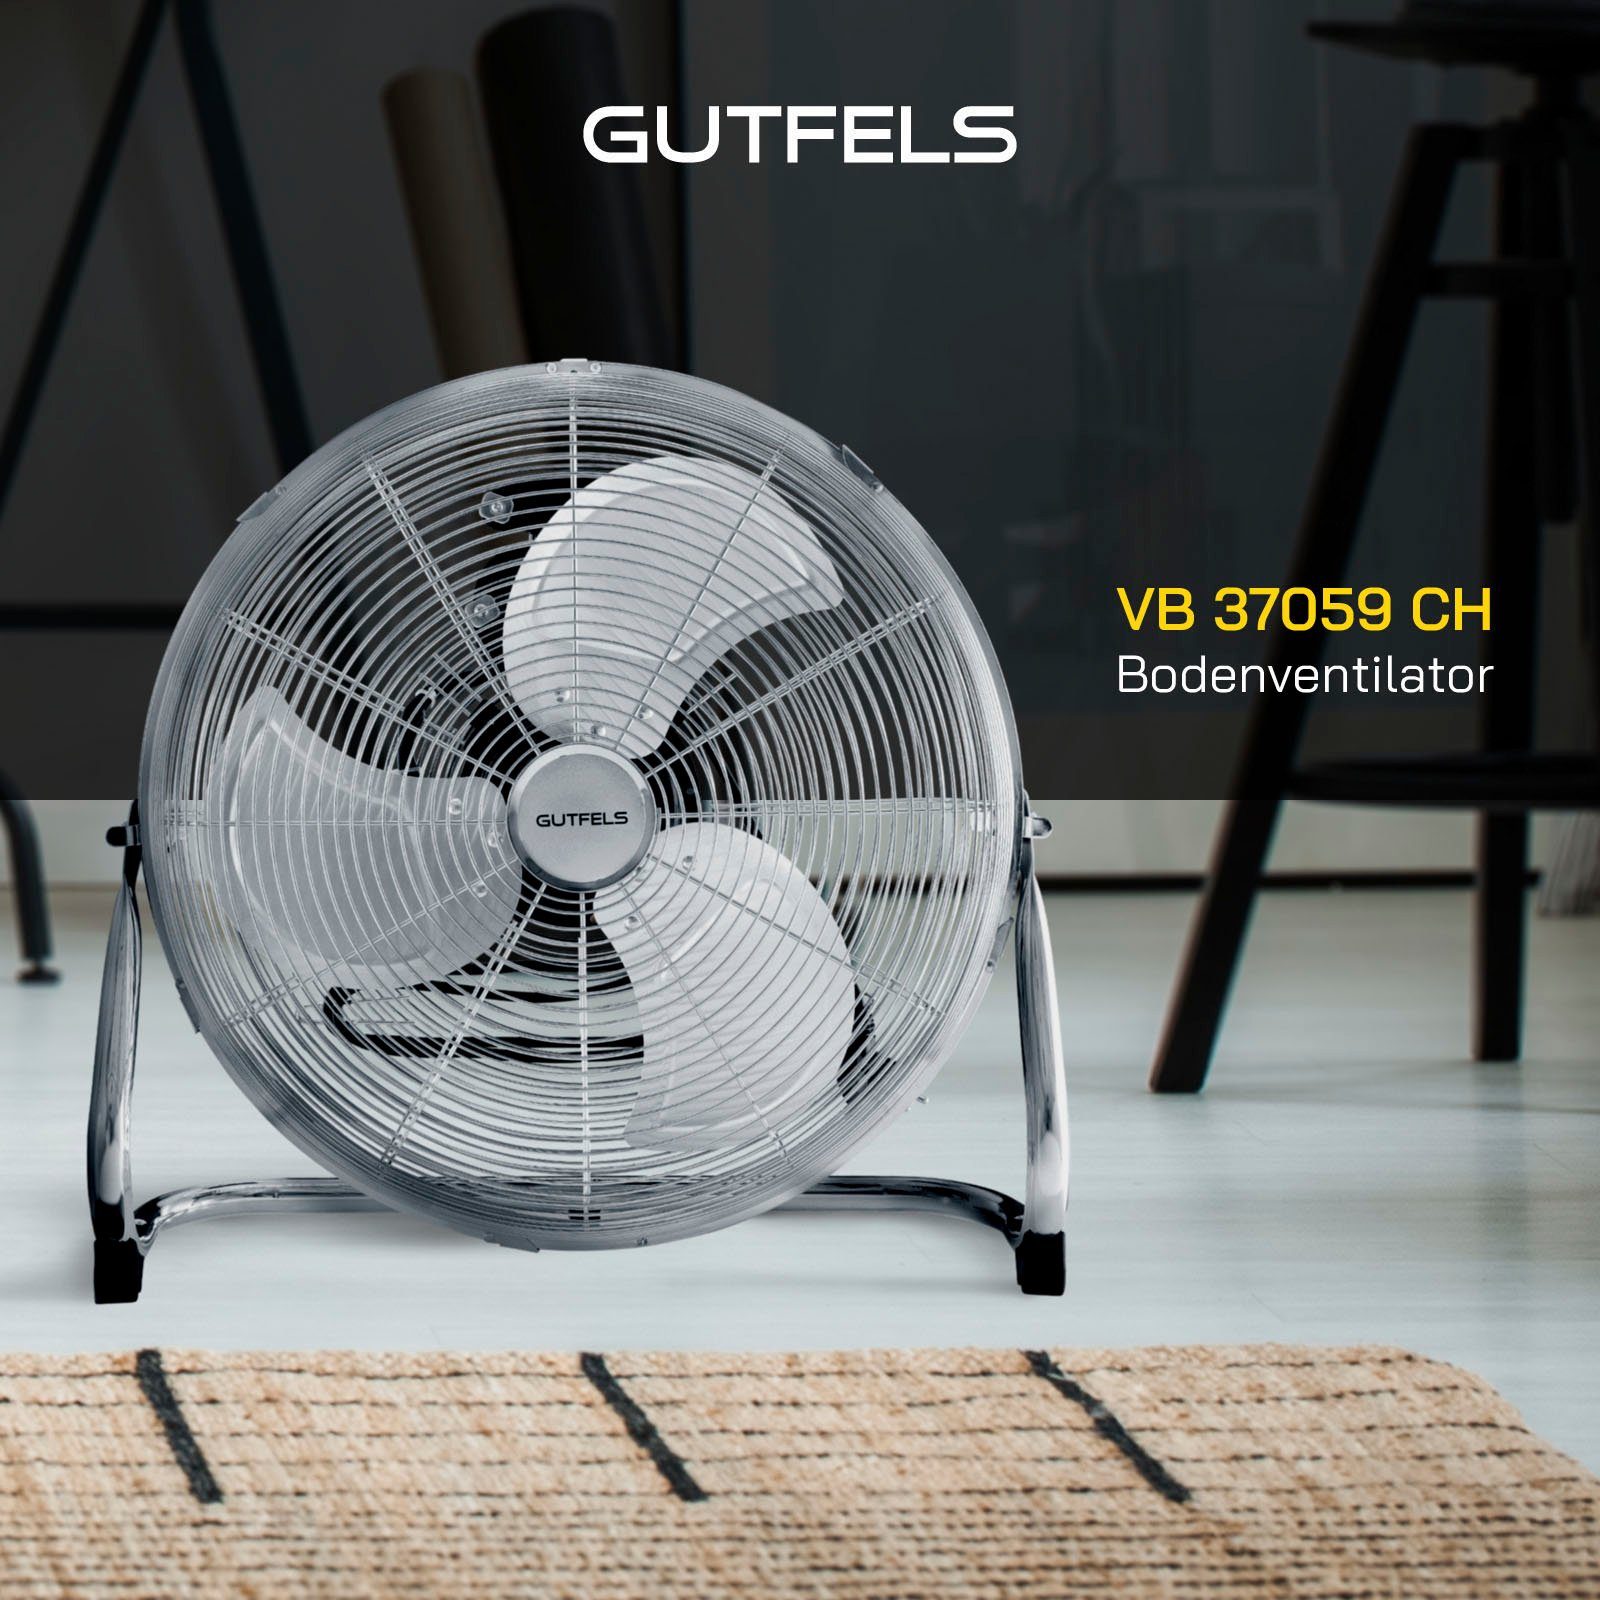 Gutfels Bodenventilator Vollmetall, VB 37059 ch, 100 Leistung, edelstahlfarben Ø 50 cm, W